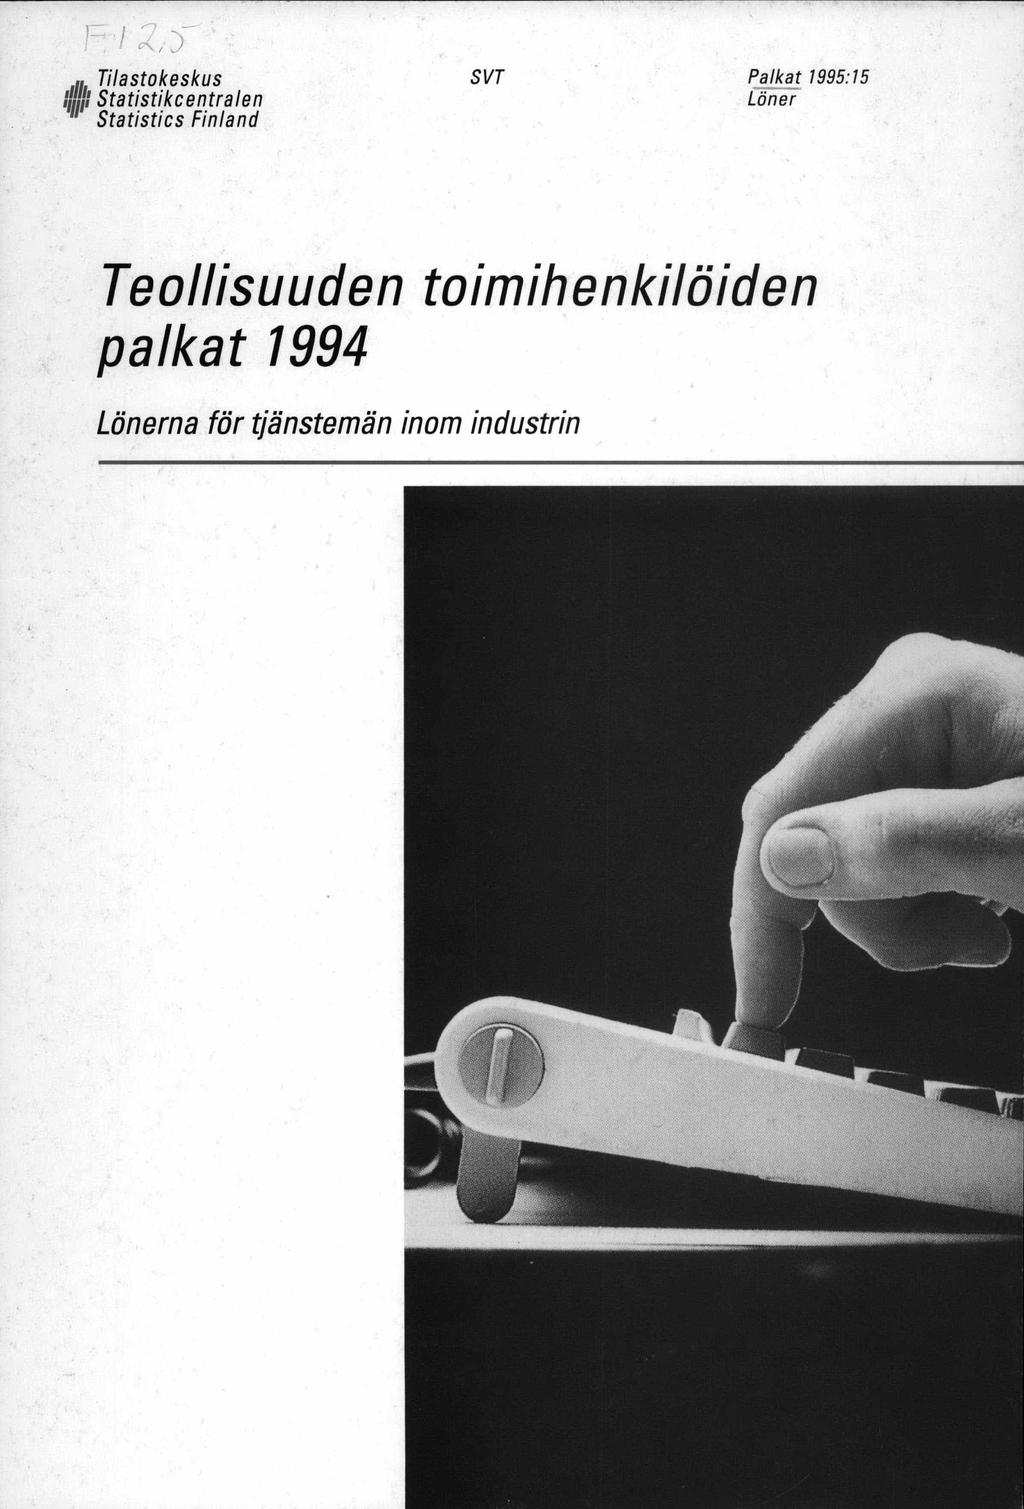 F. i z r II Tilastokeskus SVT Palkat 1995:15 i j 1 Statistlkcentralen Löner "